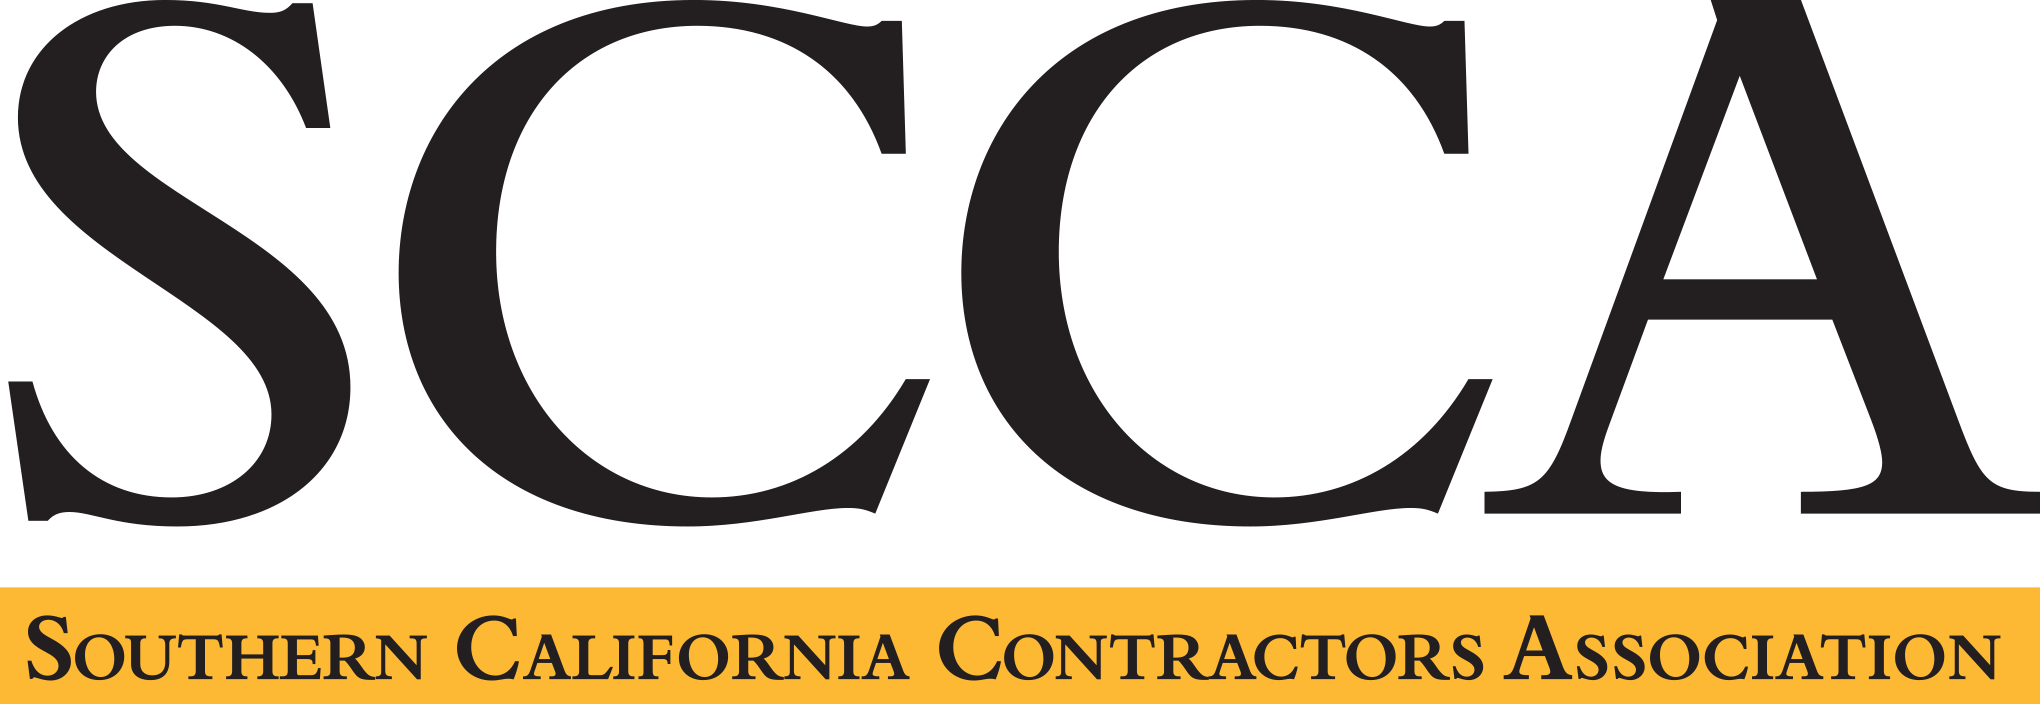 Southern California Contractors Association Logo